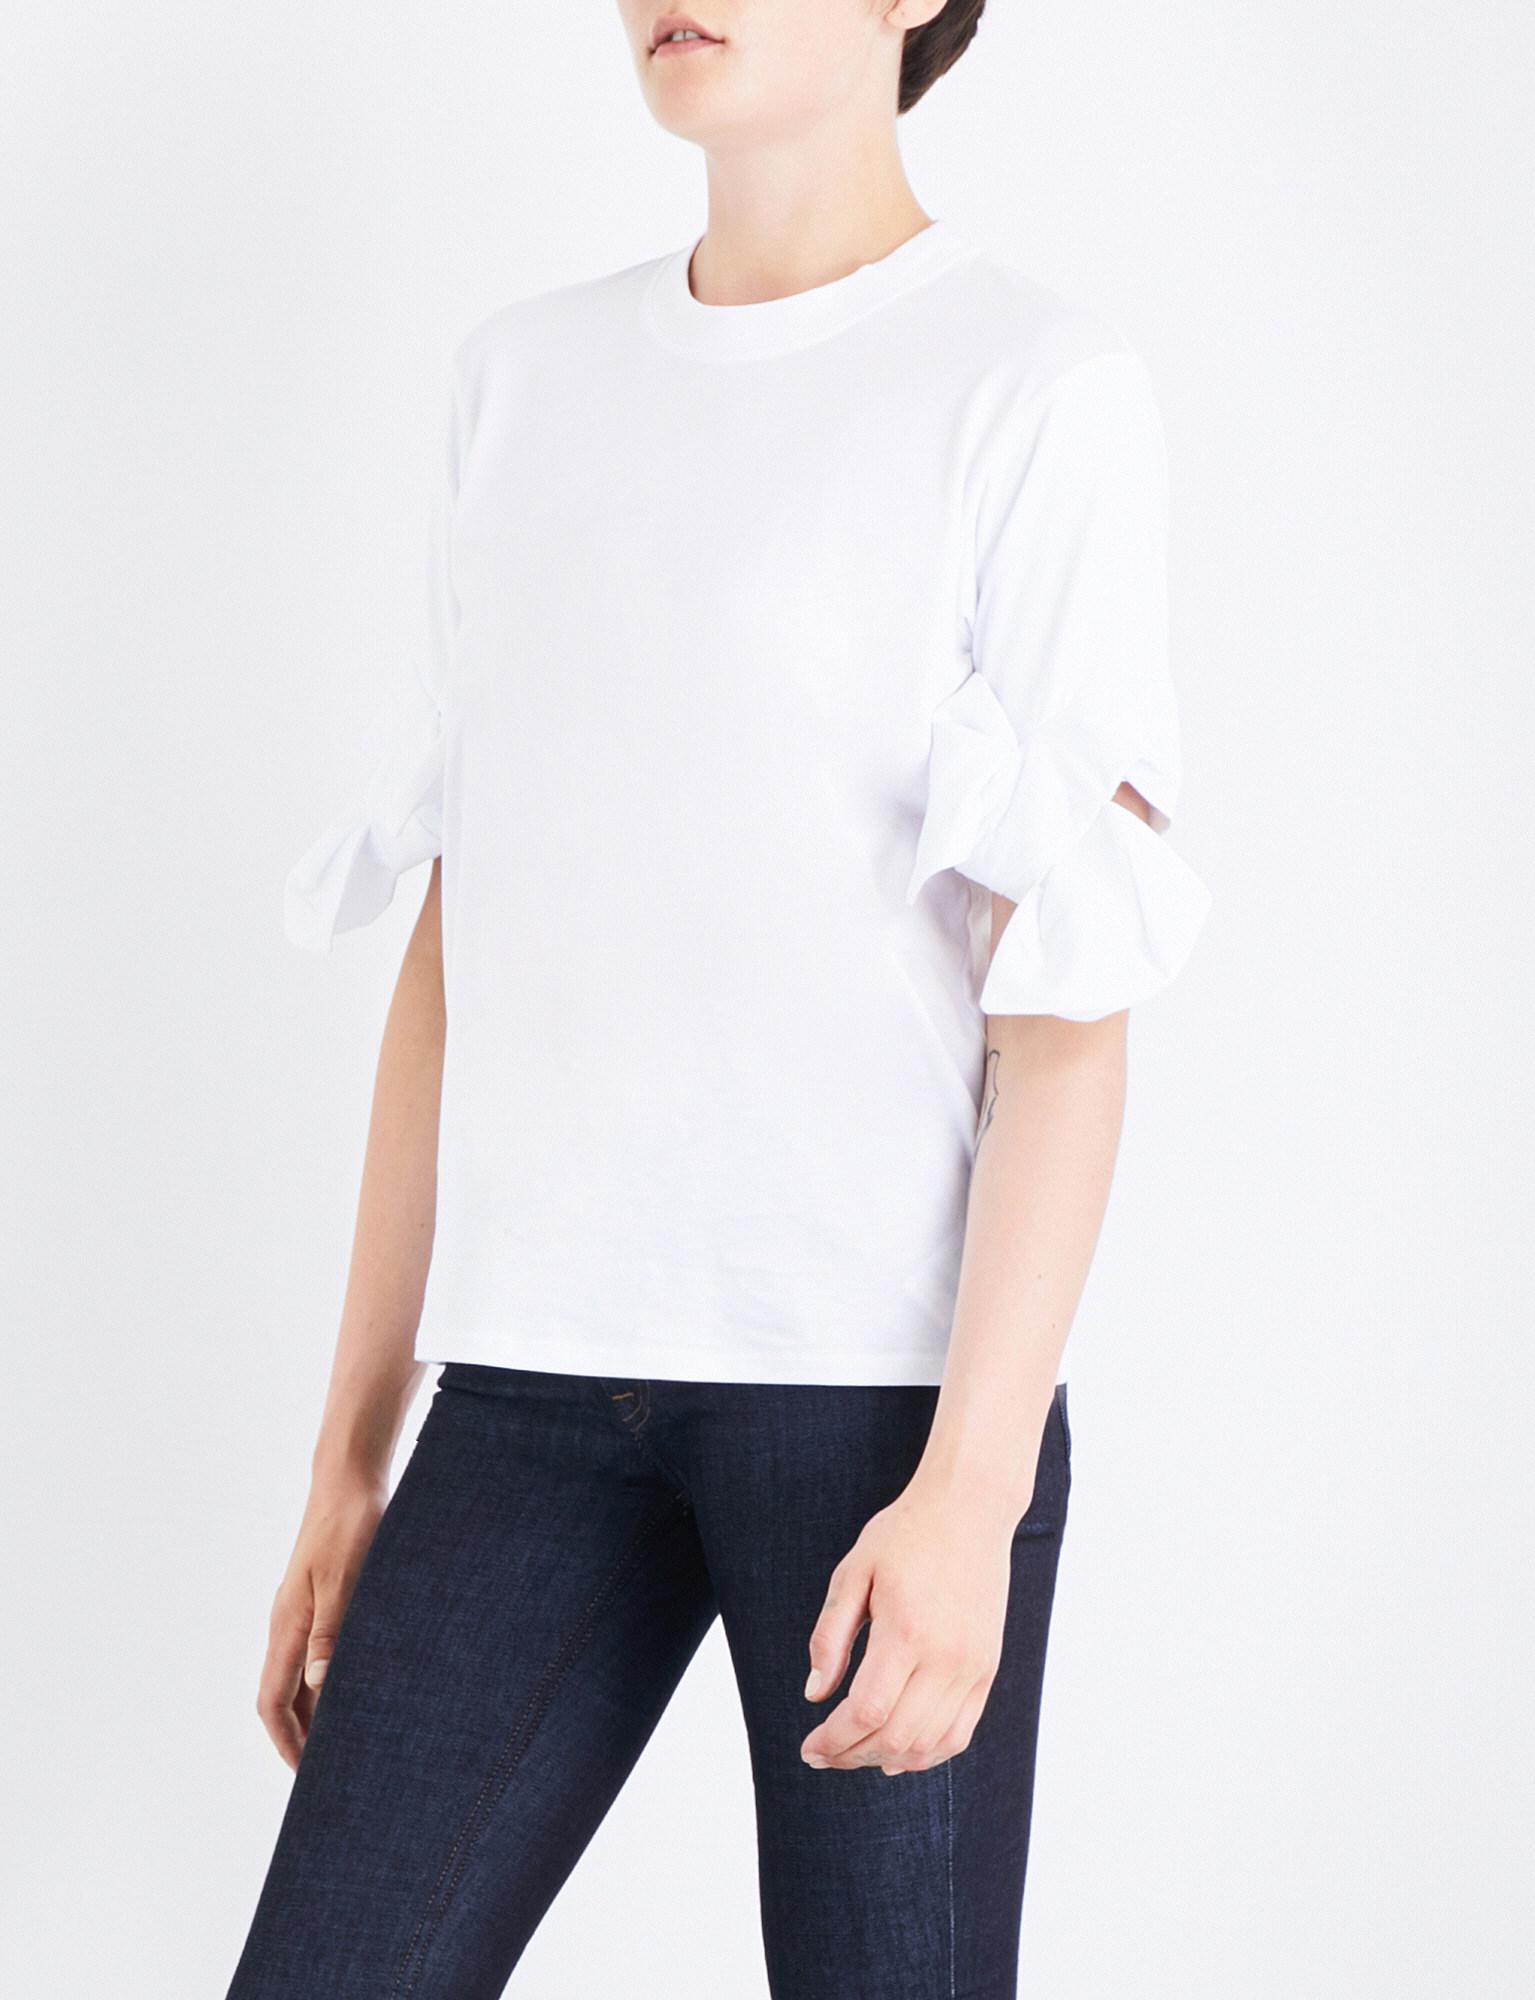 beckham white t shirt